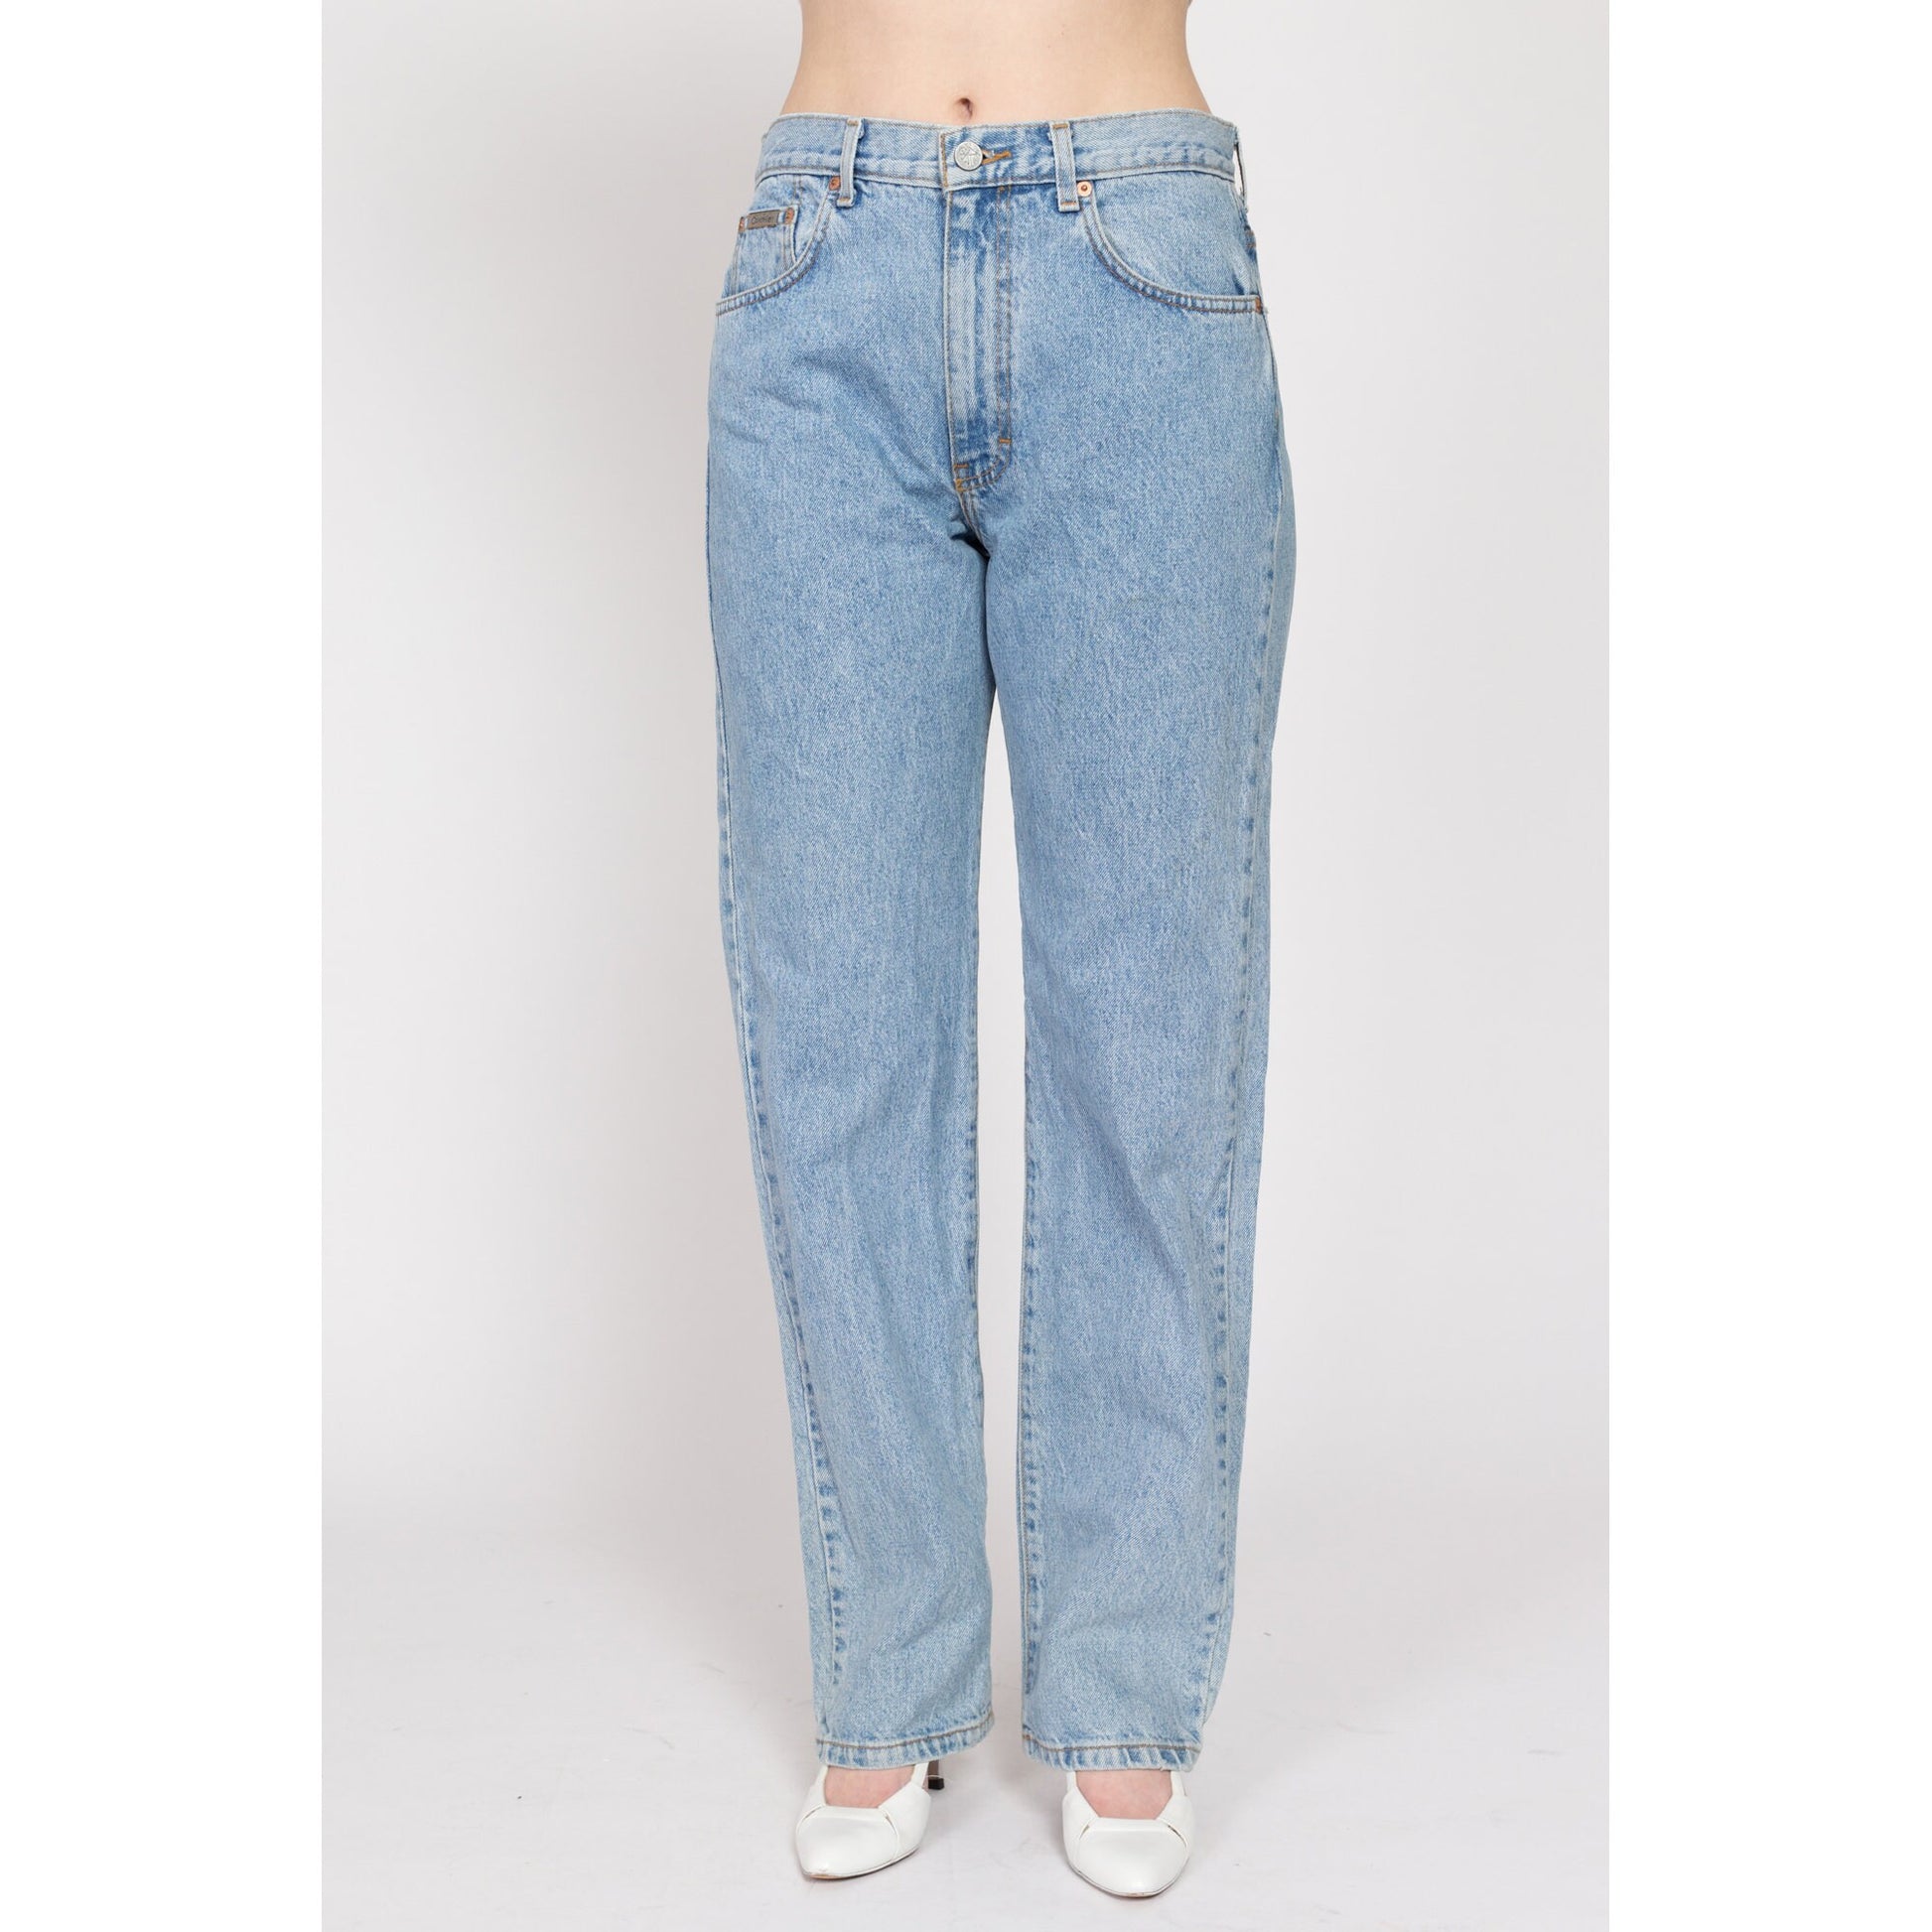 Medium 90s Calvin Klein Light Wash Straight Leg Jeans 30.5" | Vintage CK Denim High Waisted Mom Jeans